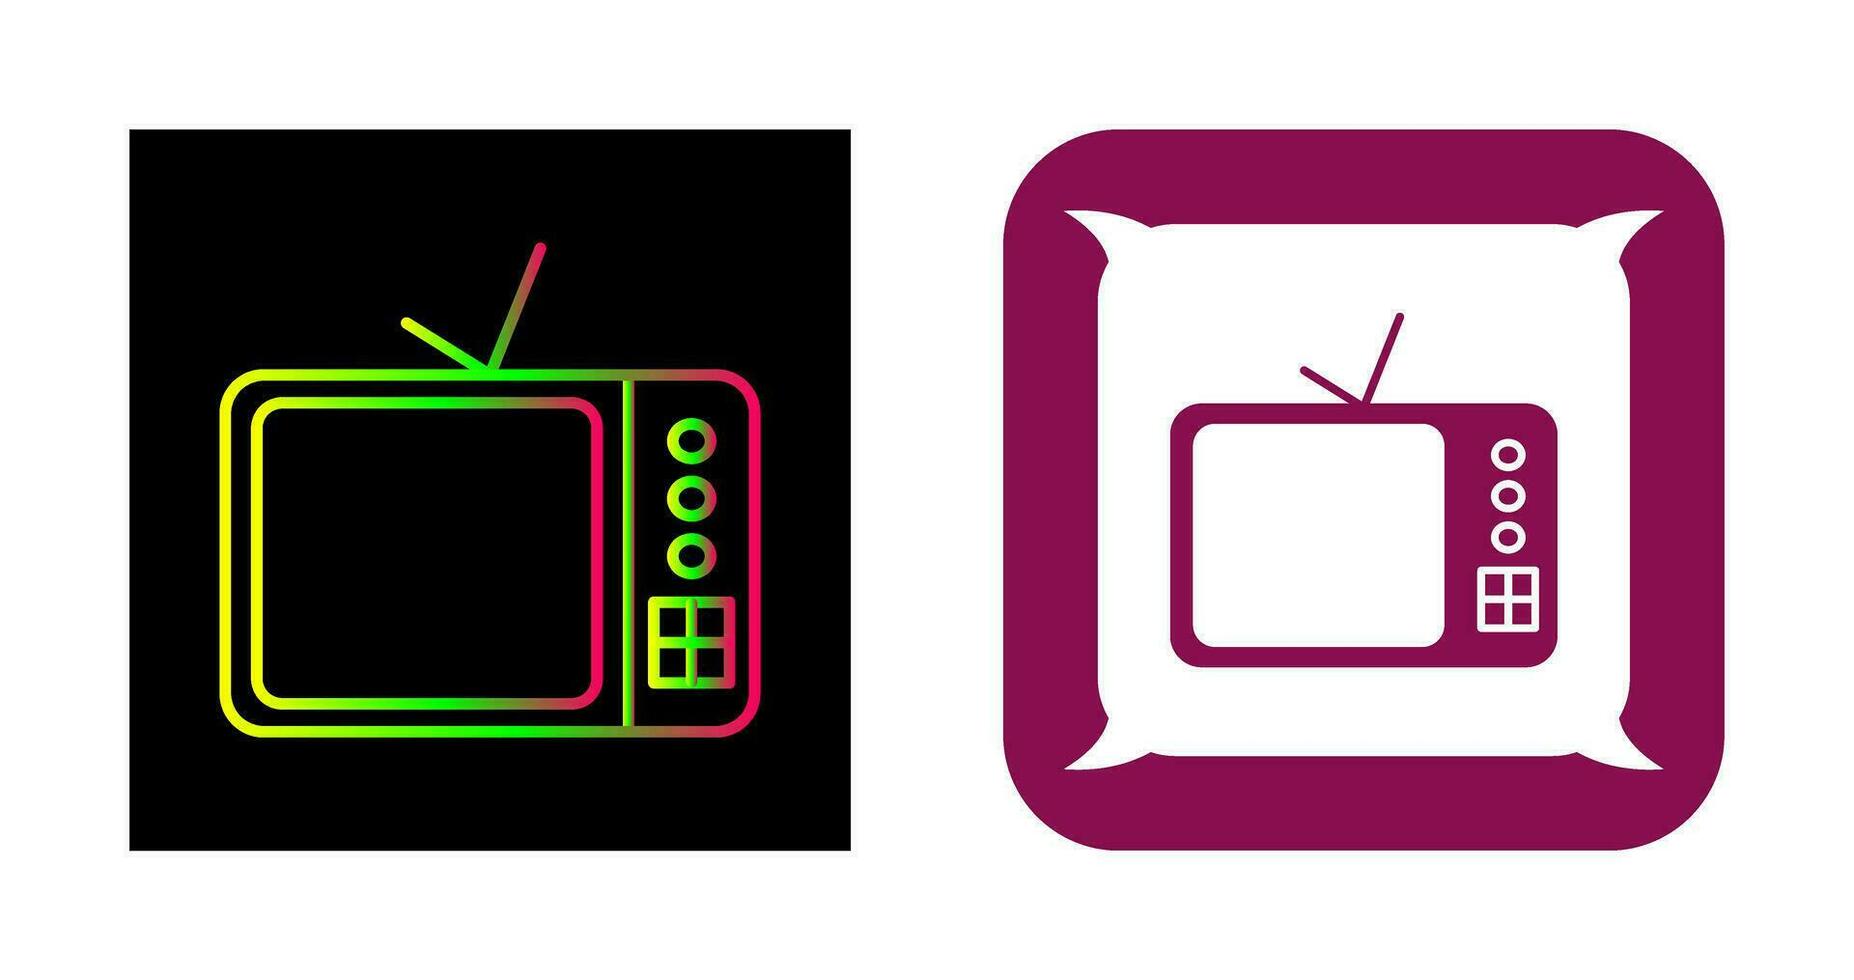 Vektorsymbol für Fernseher vektor